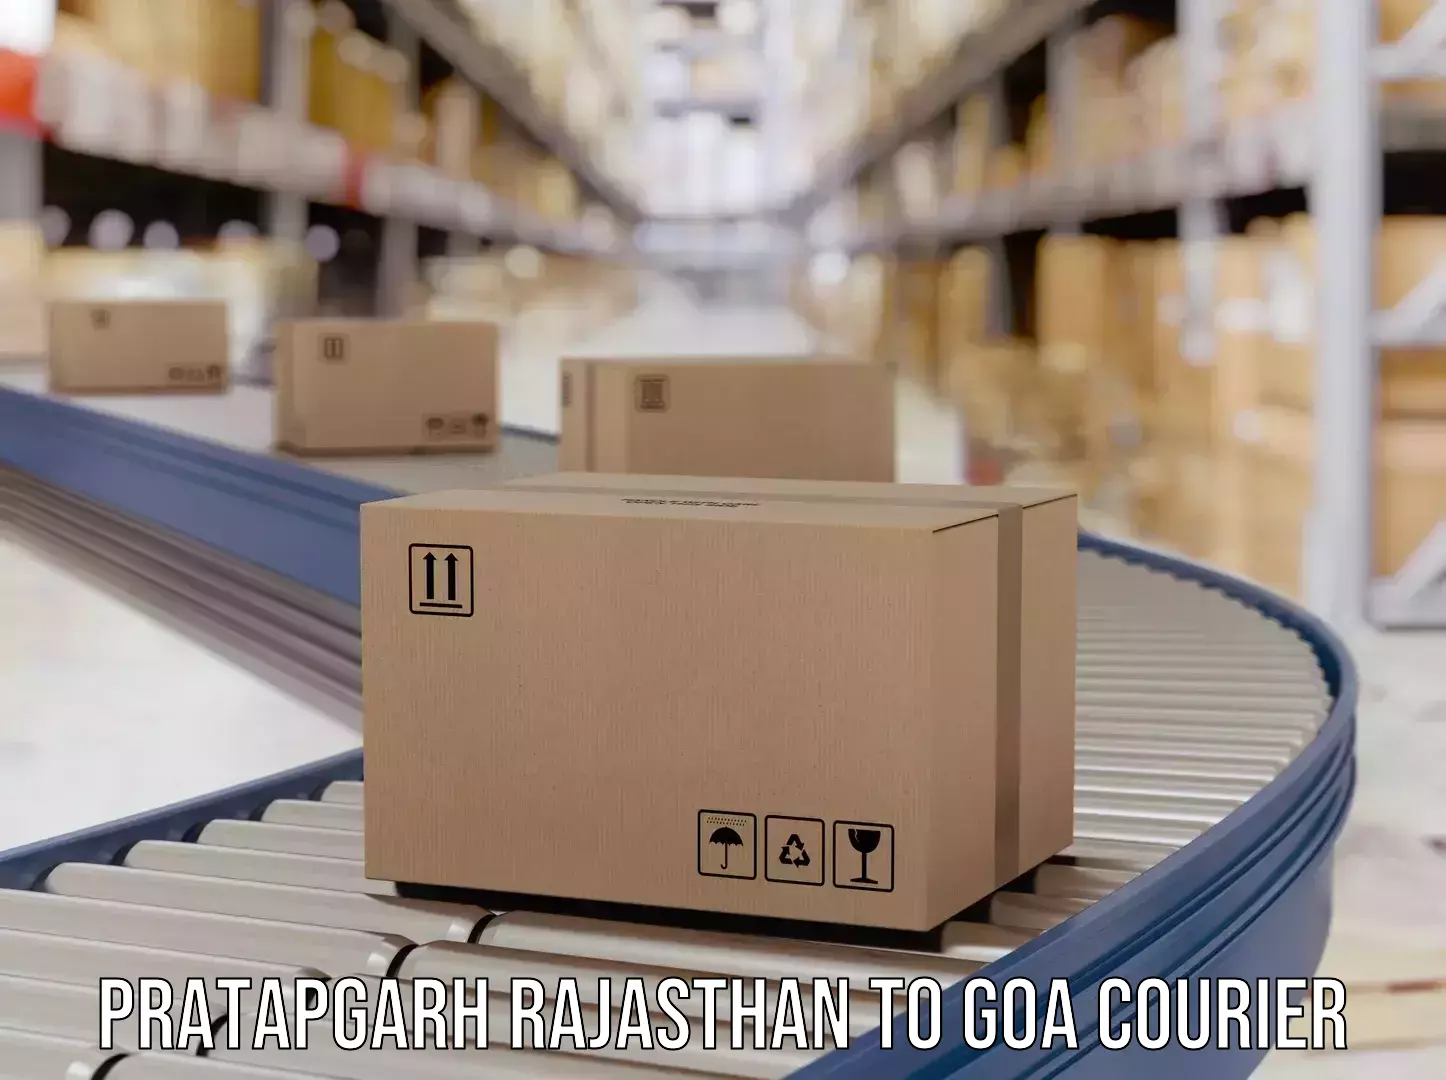 Courier service comparison Pratapgarh Rajasthan to South Goa